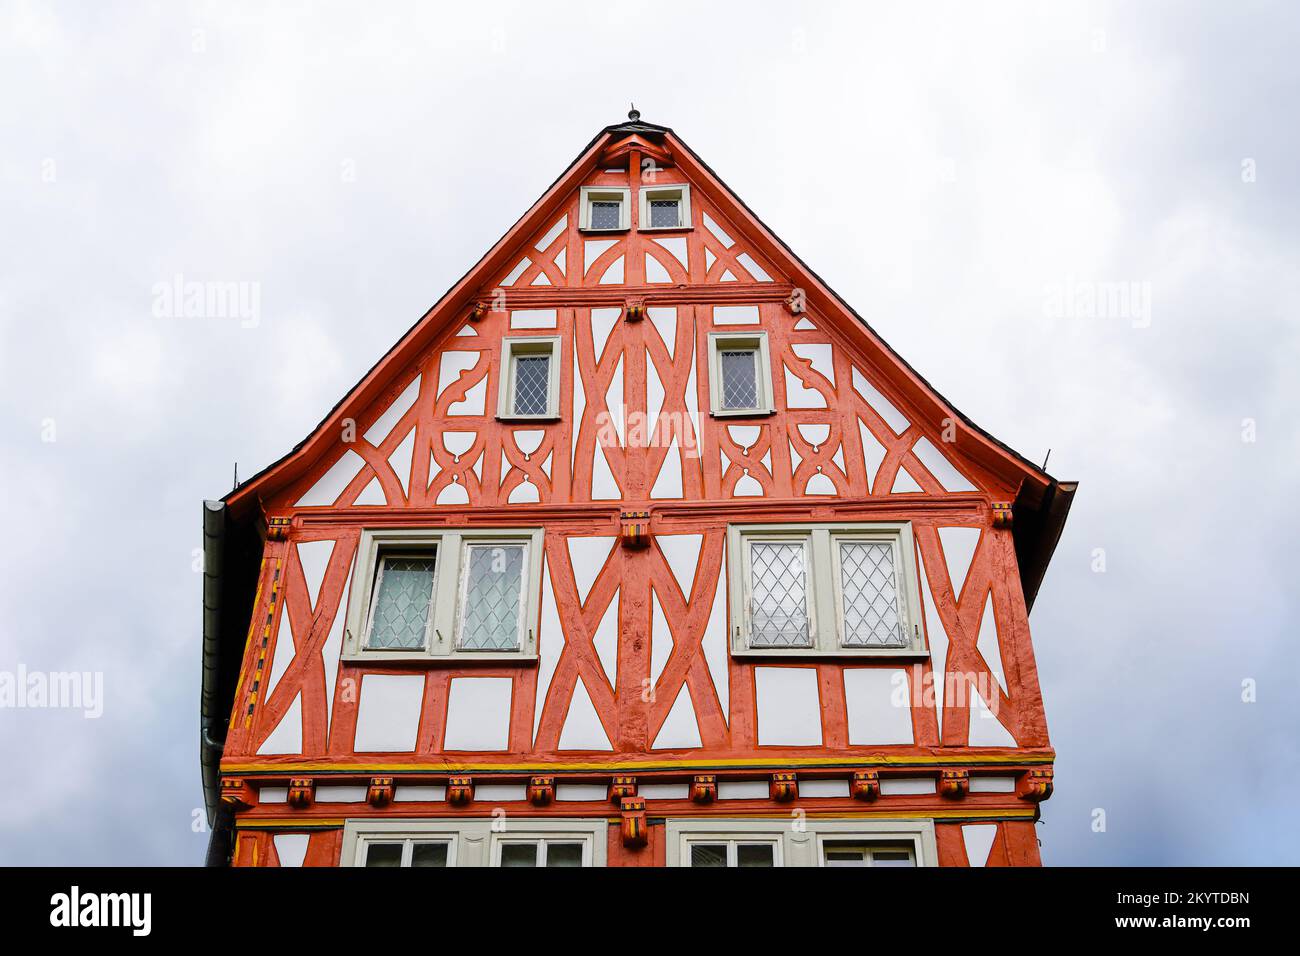 Facade of an old half-timbered house in Limburg an der Lahn. Stock Photo